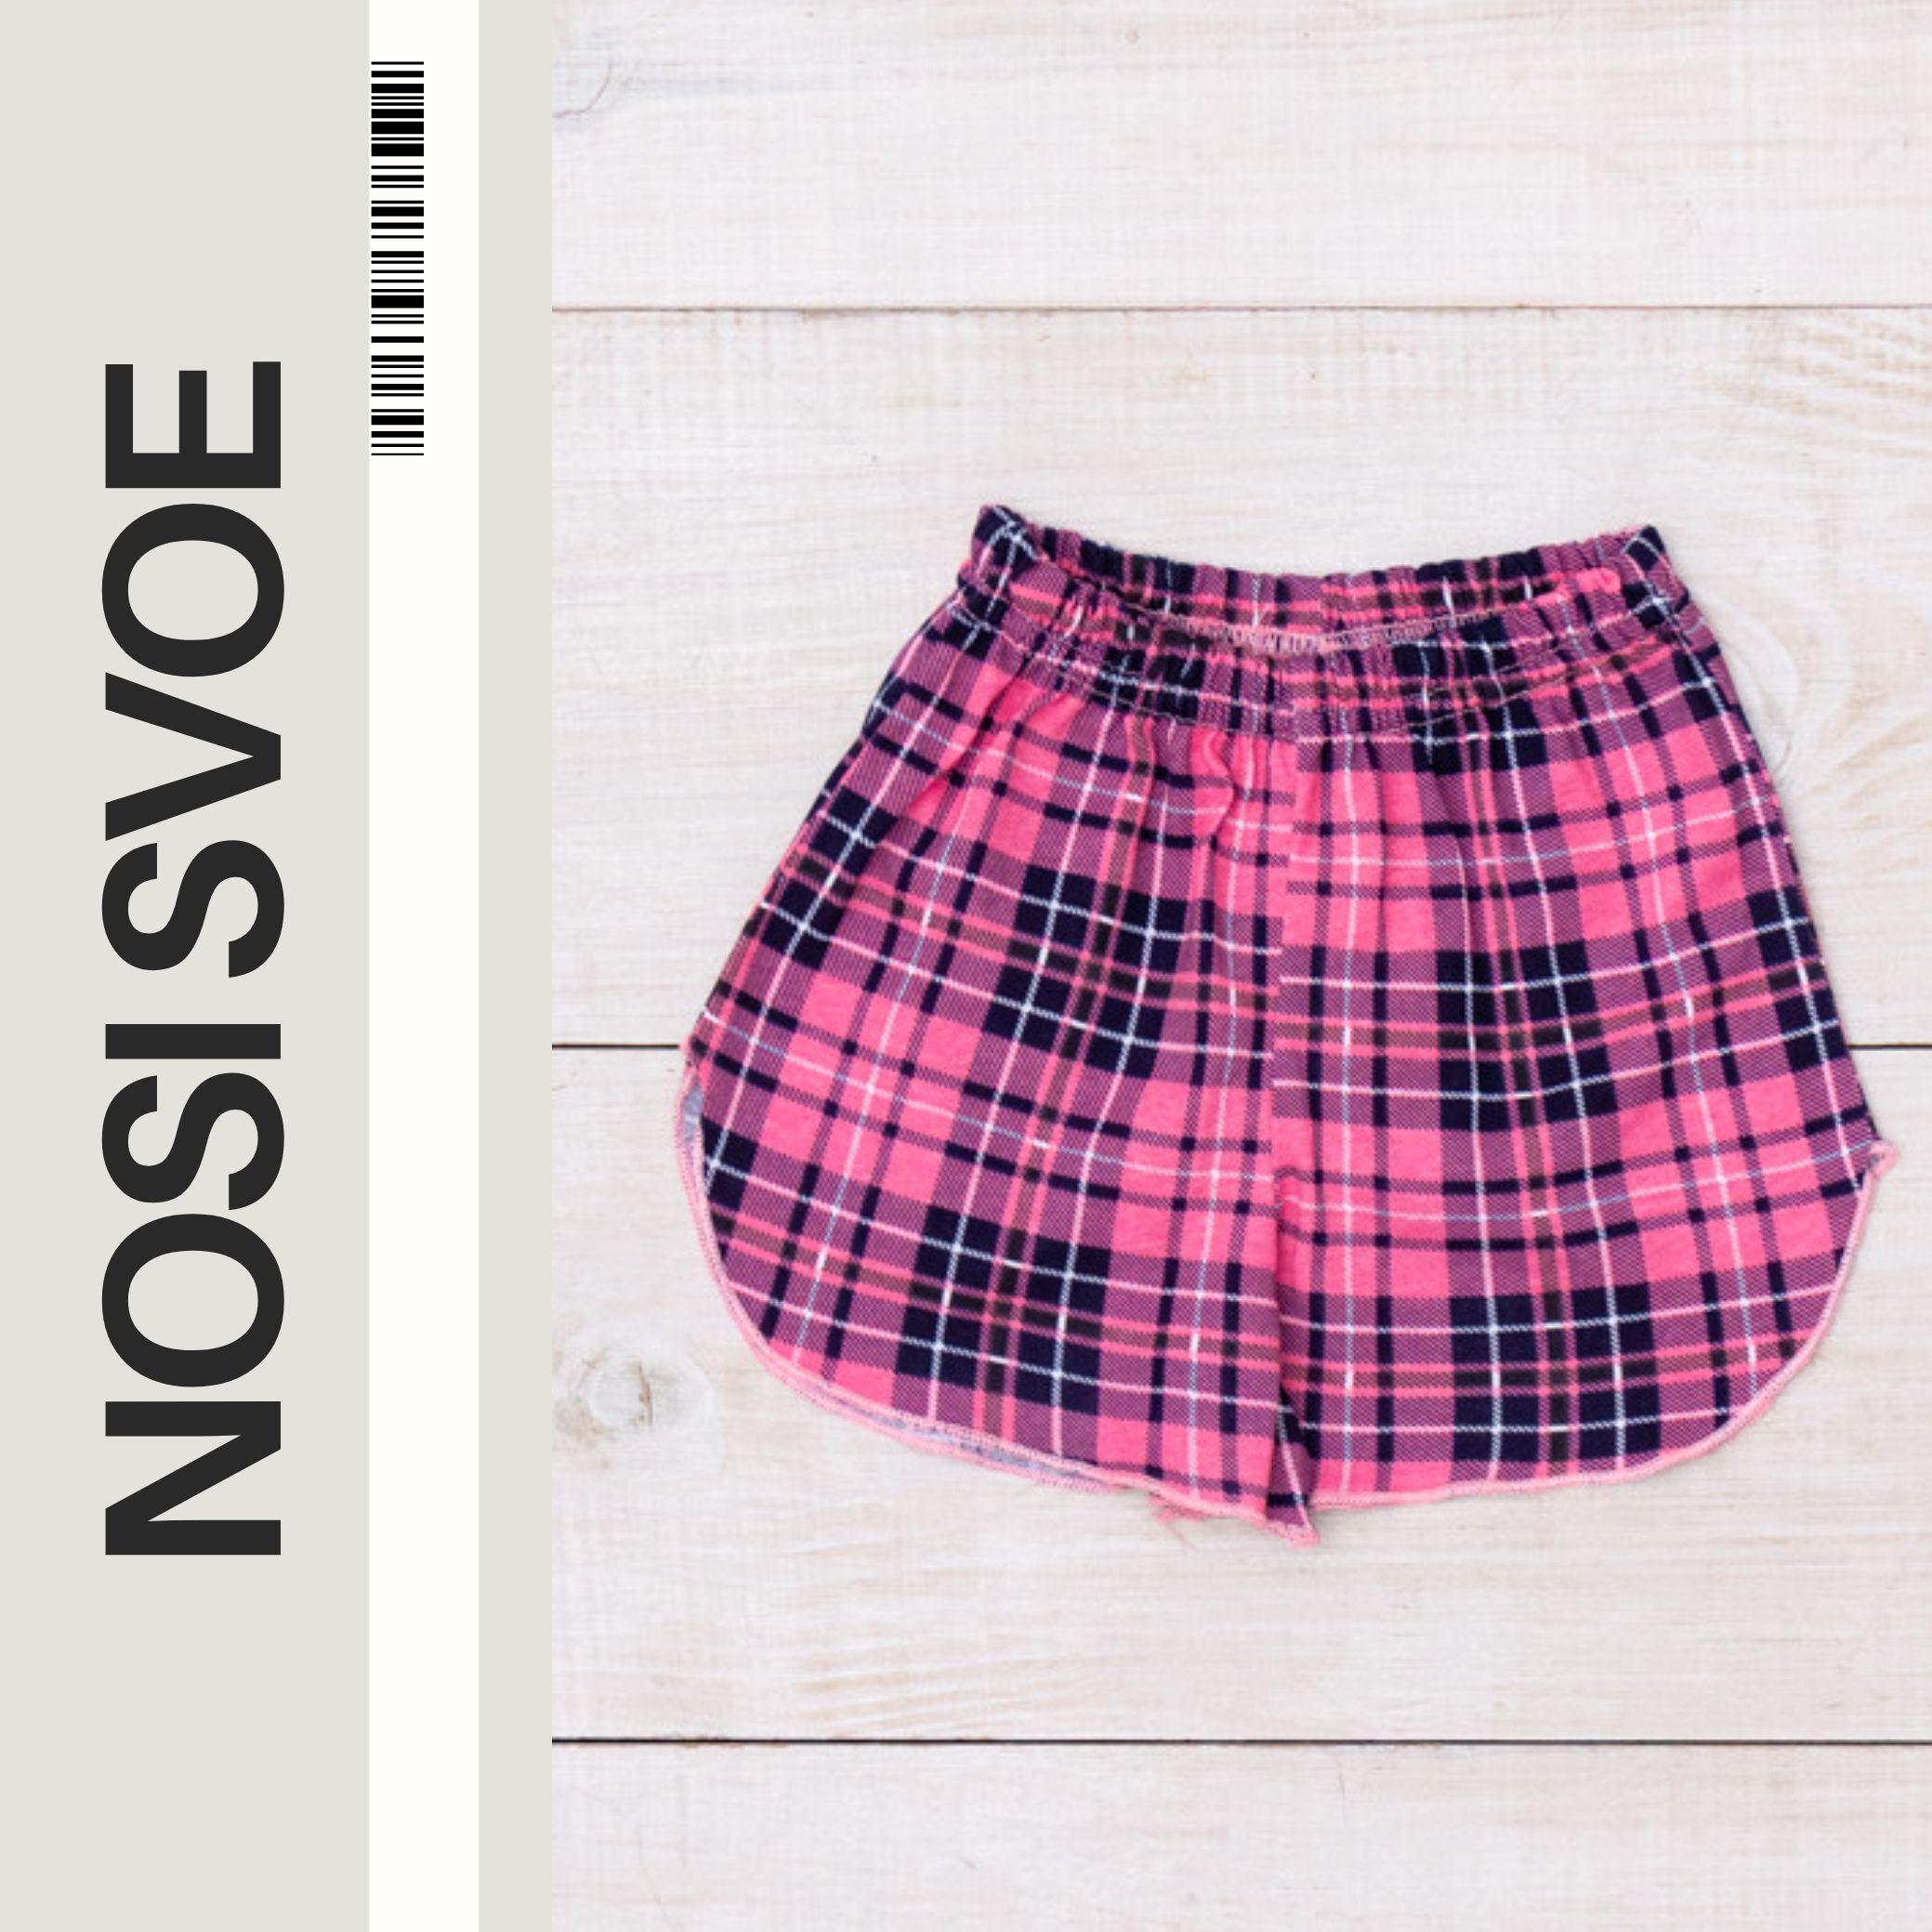 НС Shorts (Girls), Summer, Nosi Svoe, 6242-002-1